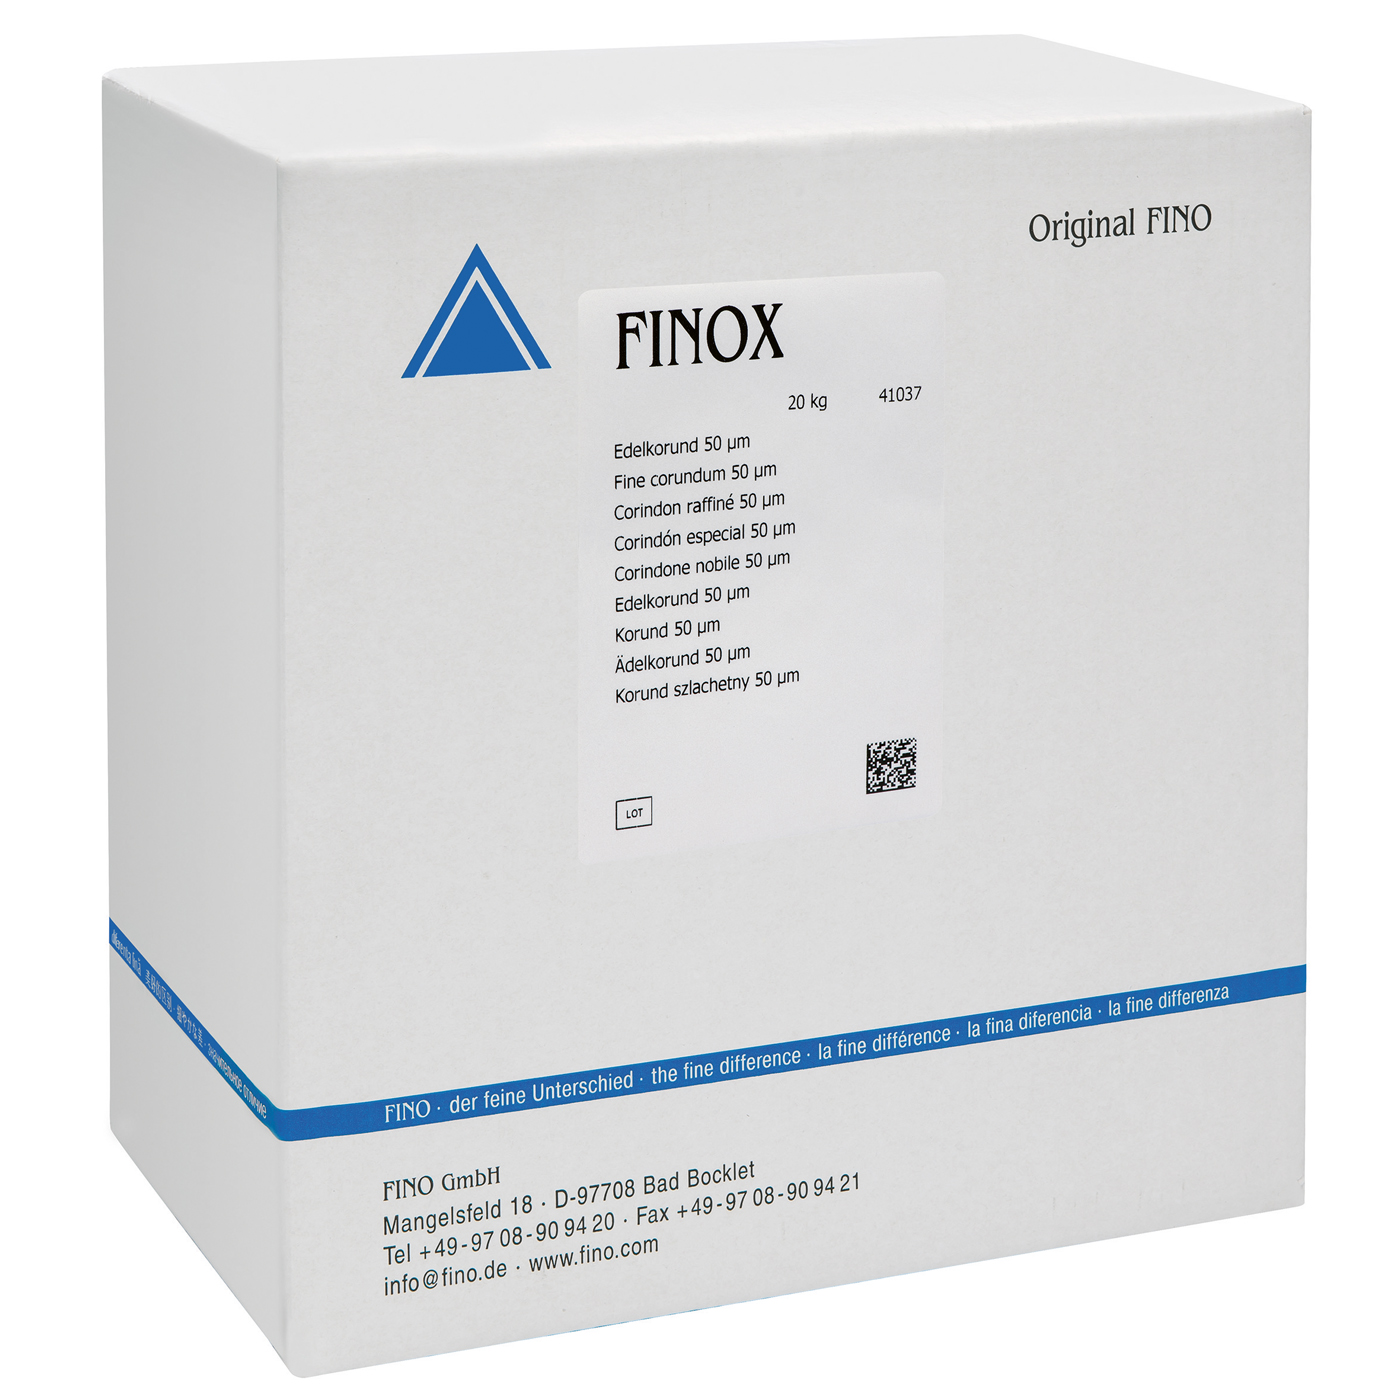 FINOX High-Grade Corundum, 50 µm - 20 kg